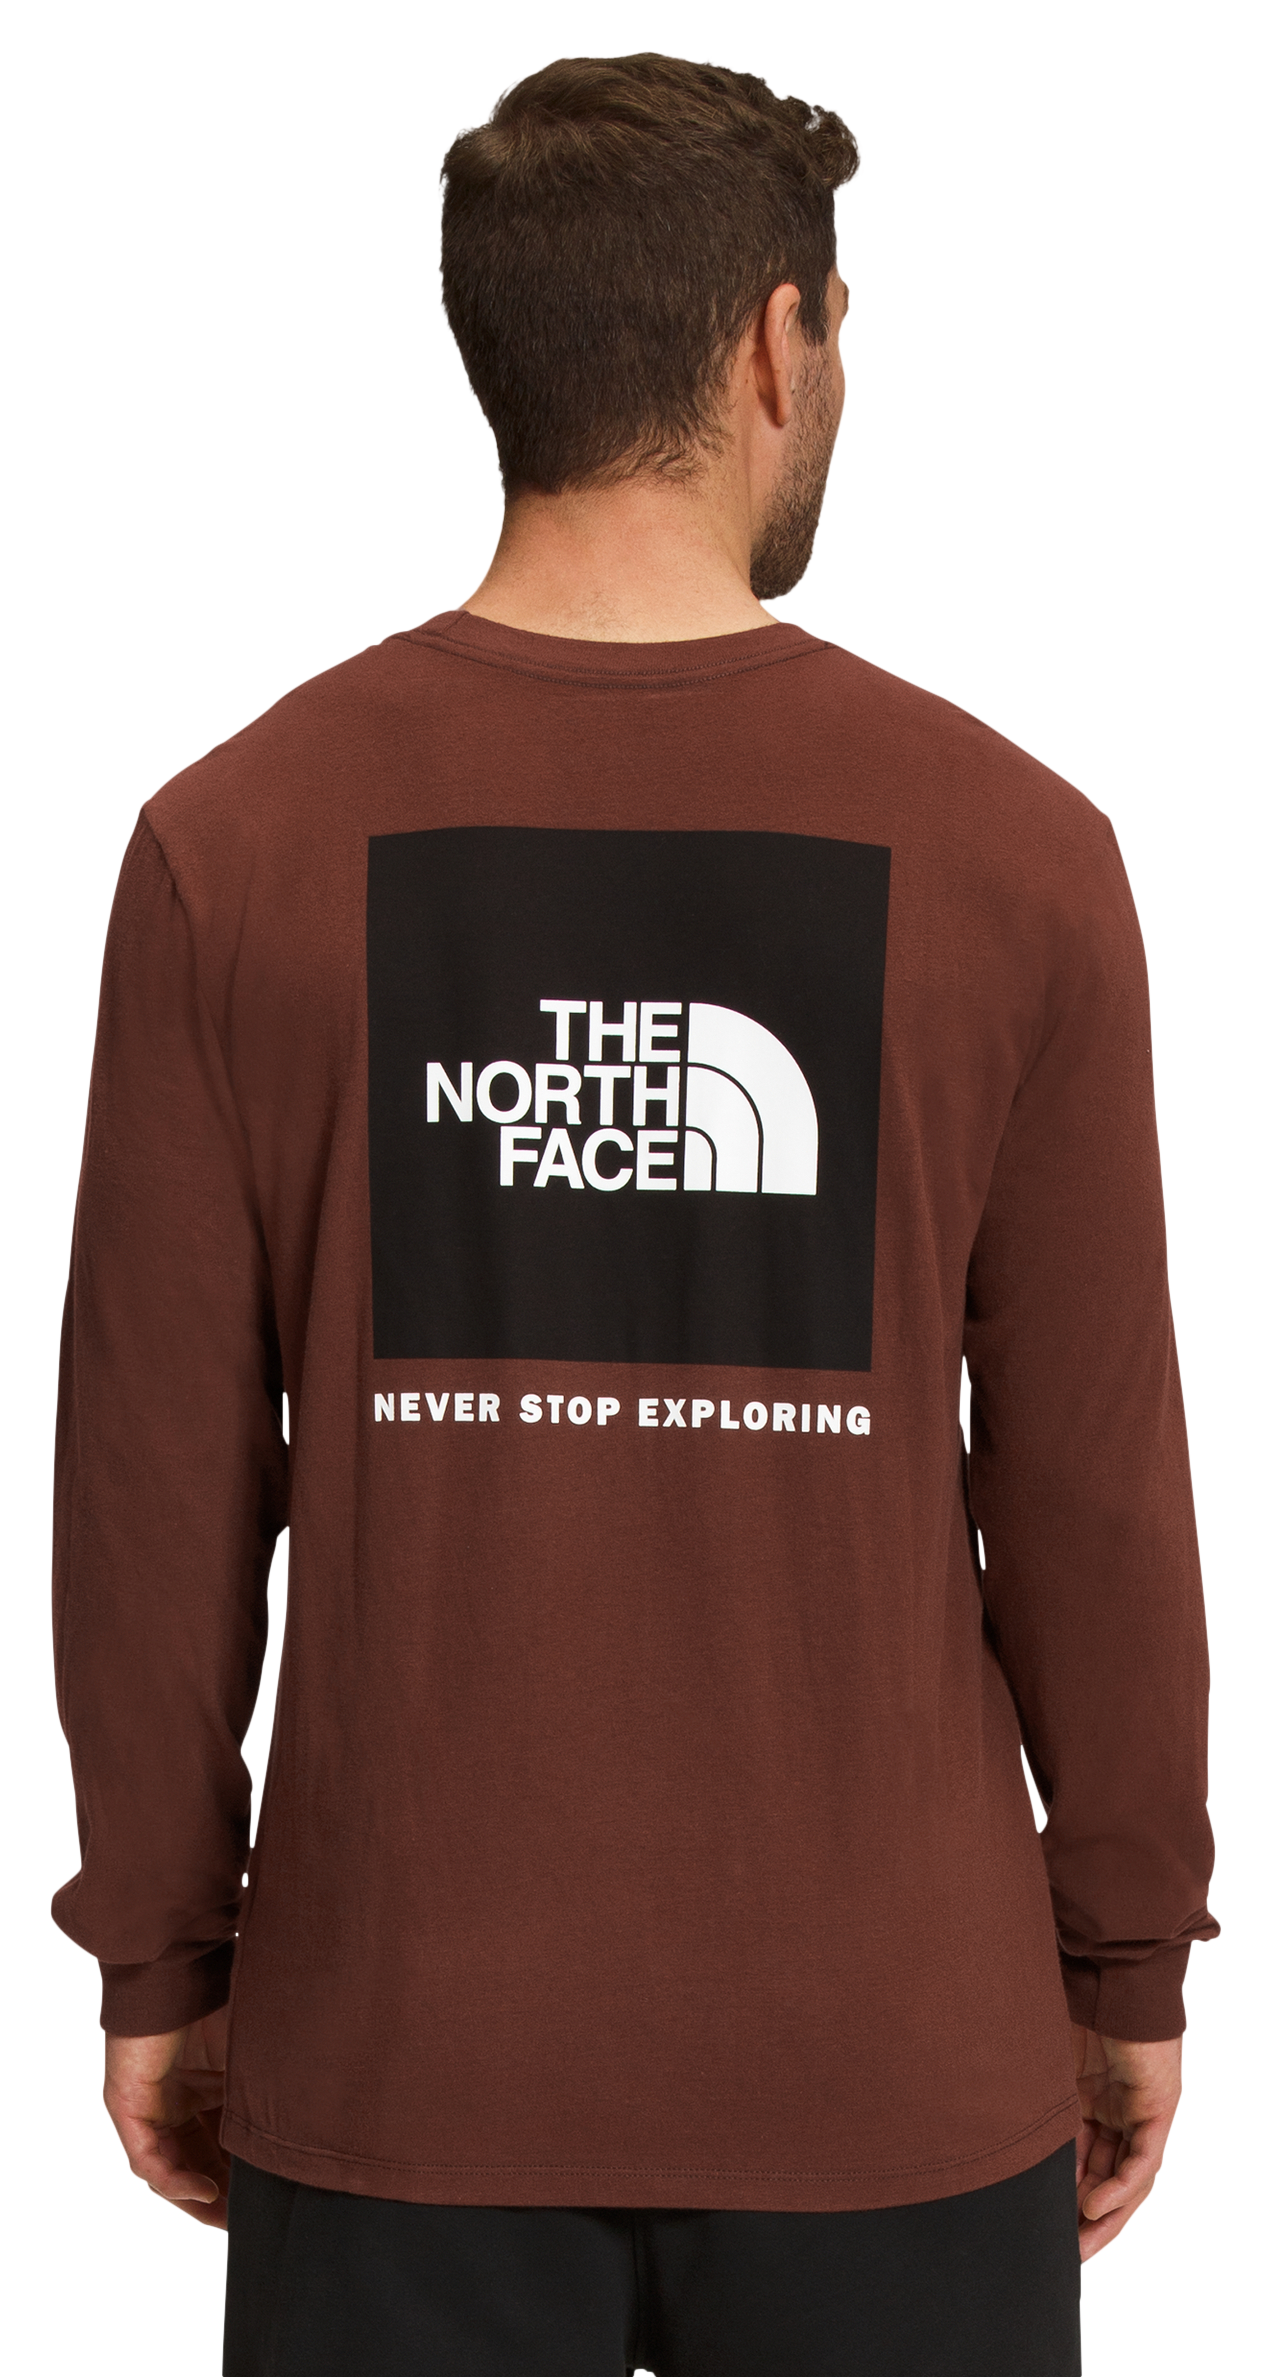 The North Face Box NSE Long-Sleeve Shirt for Men - Dark Oak/TNF Black - 2XL